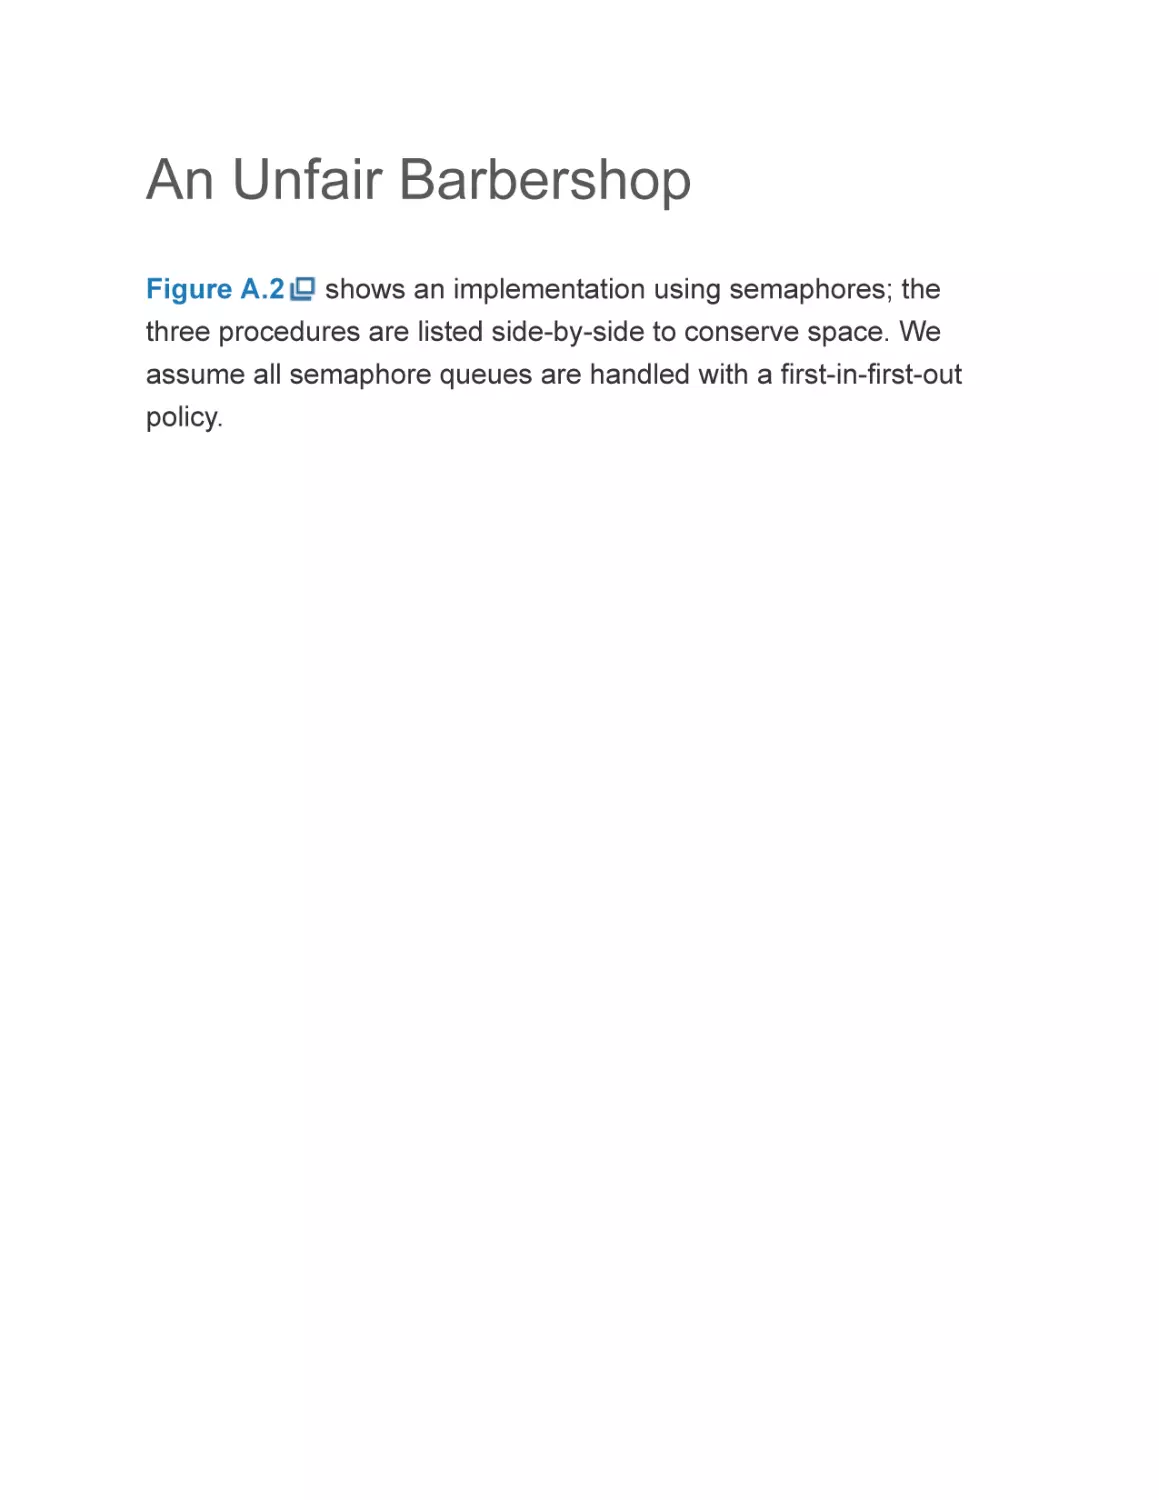 An Unfair Barbershop